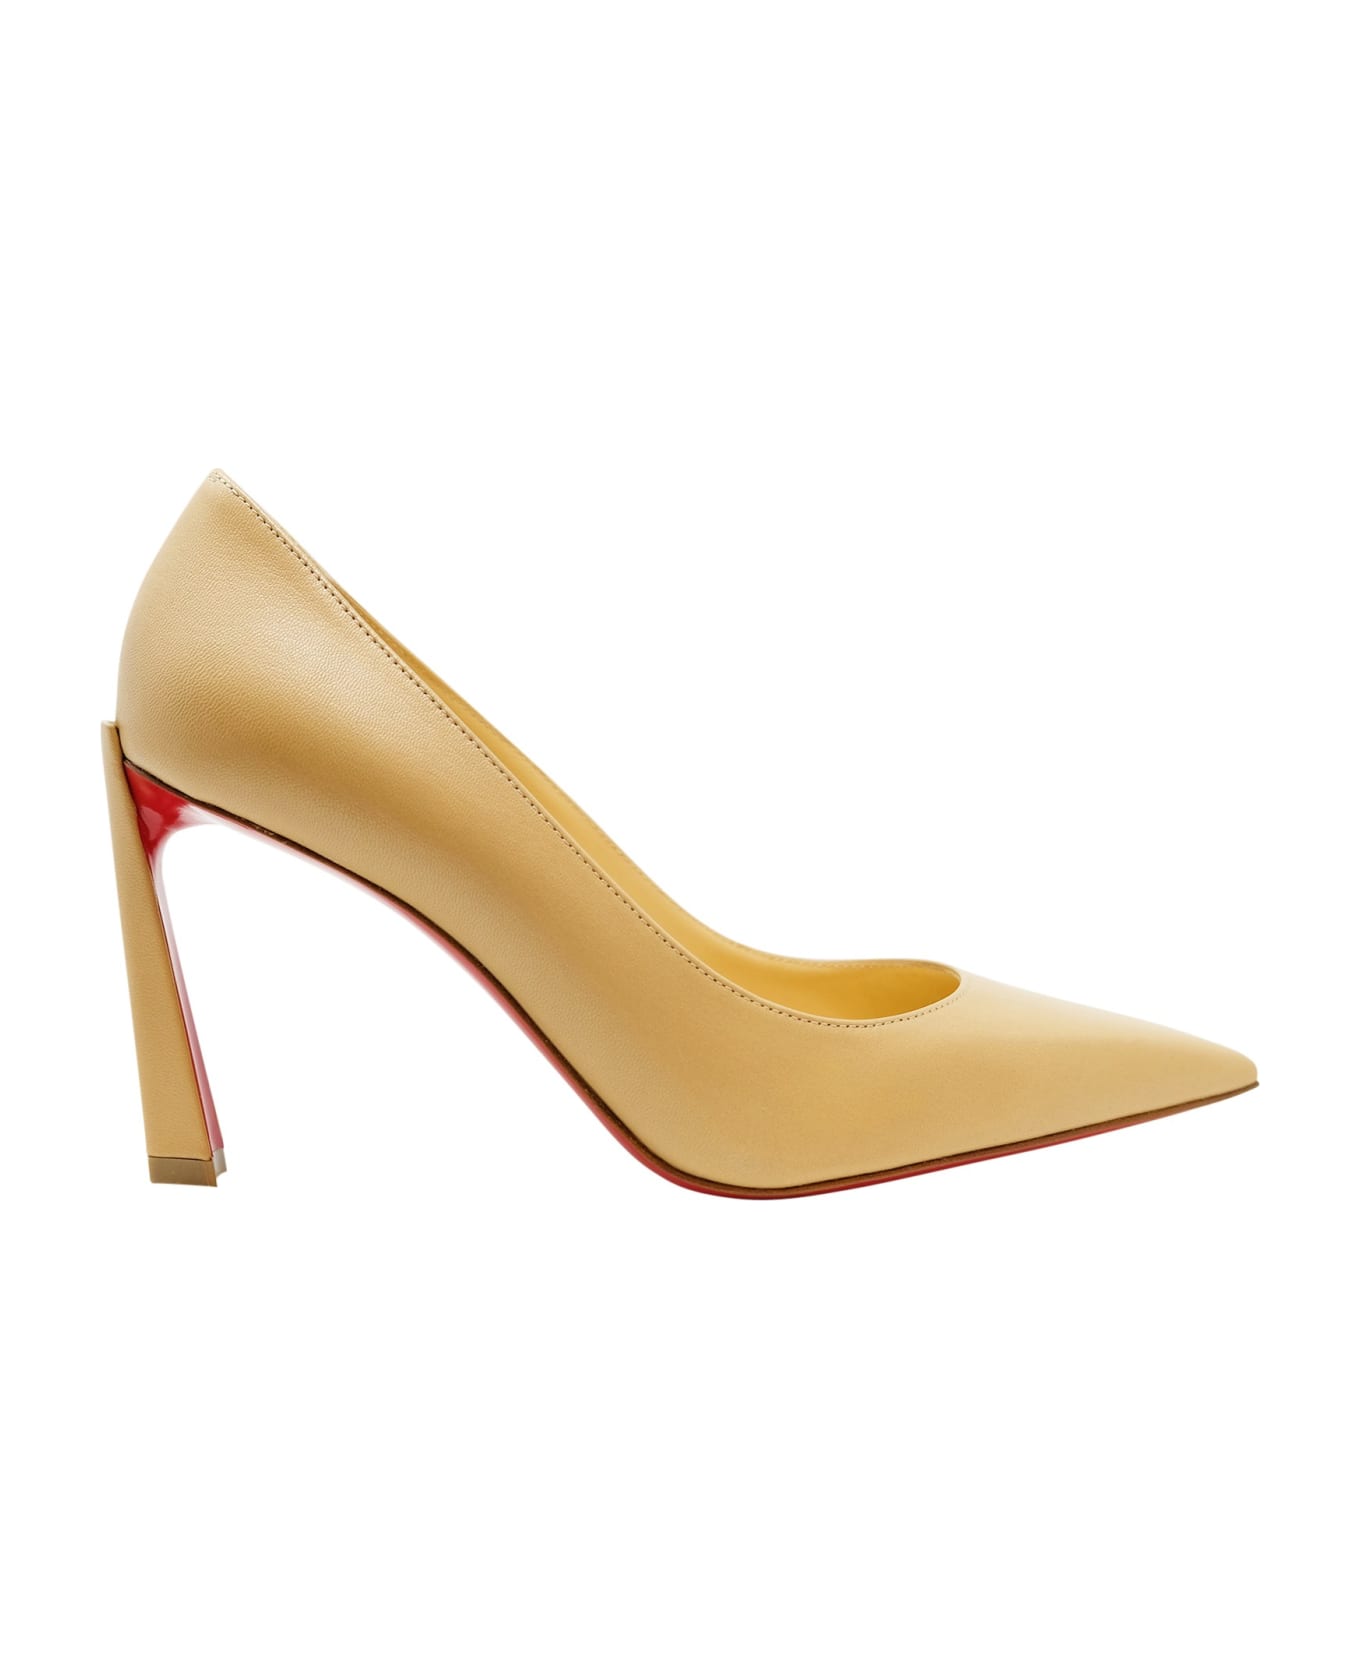 Christian Louboutin High-heeled Shoe - NUDE